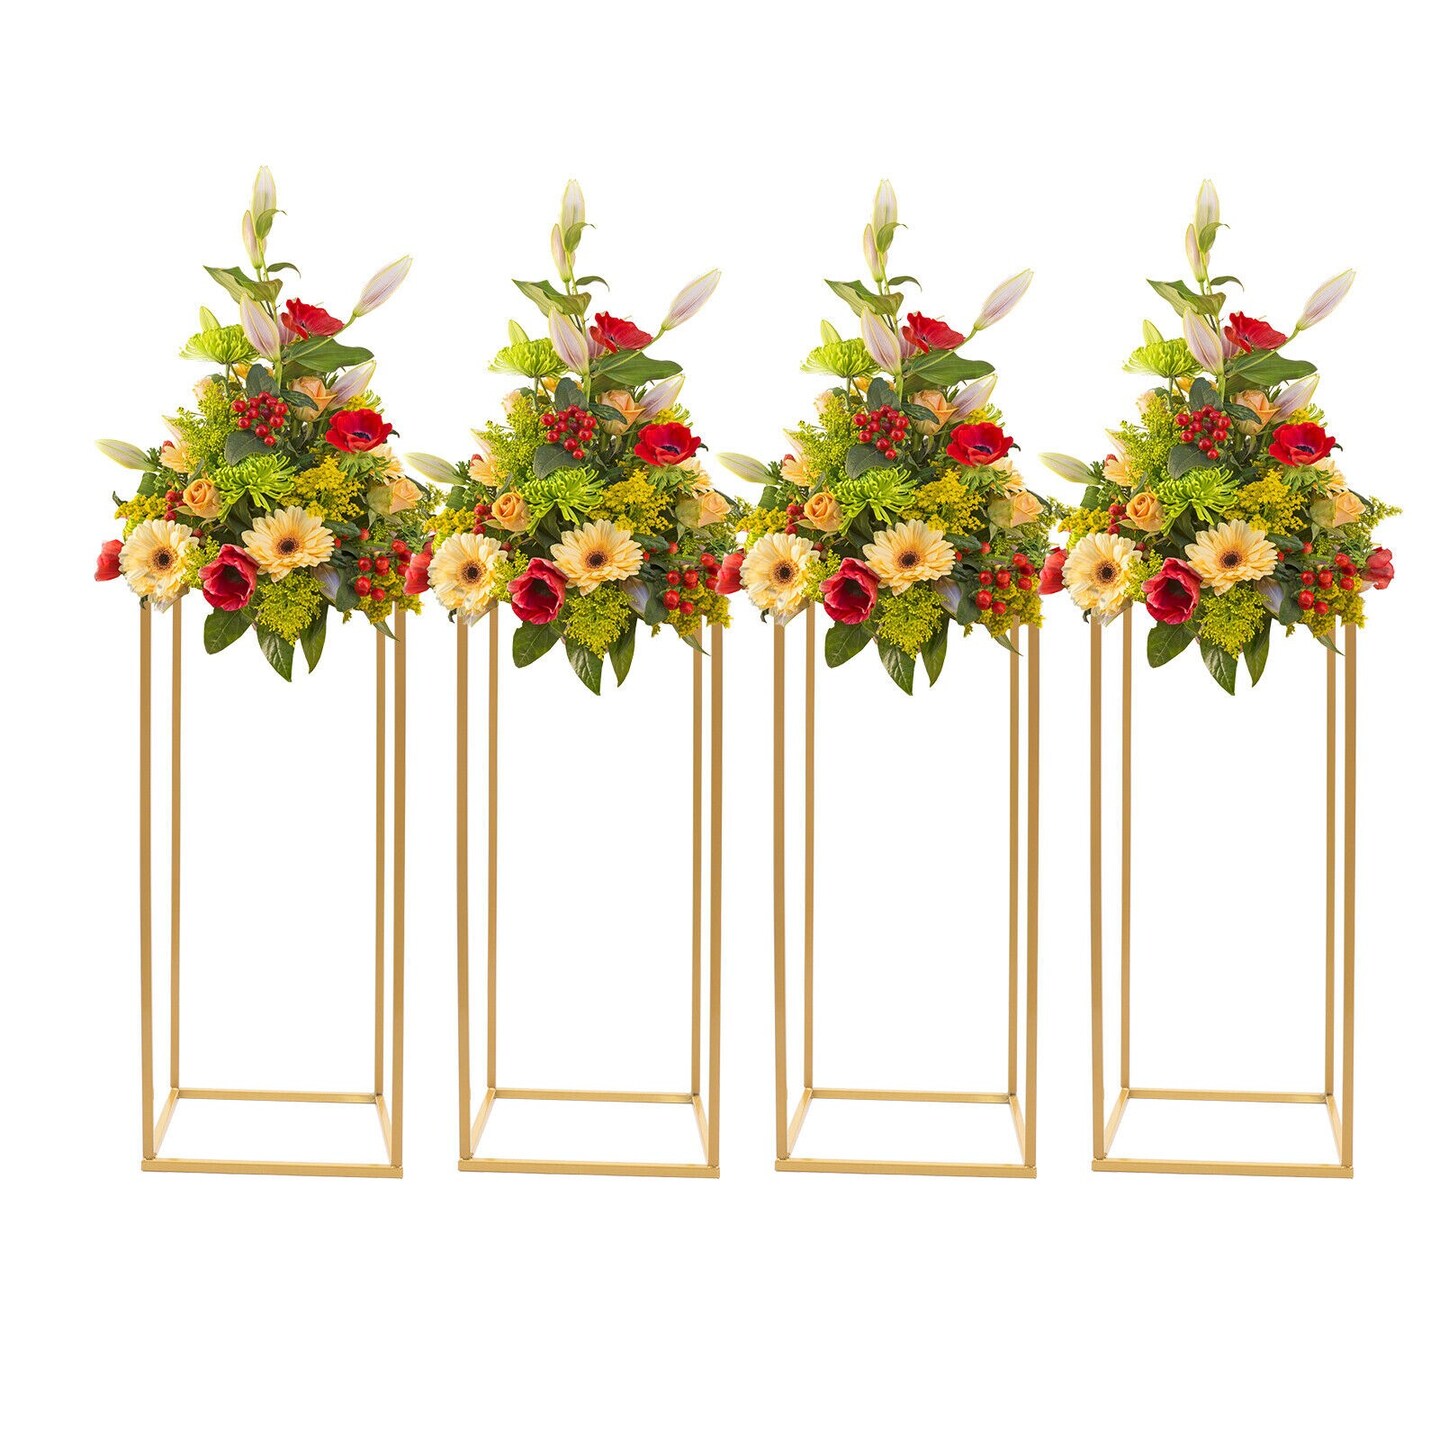 Set of 4 Metal Flower Stand Wedding Centerpiece Holders